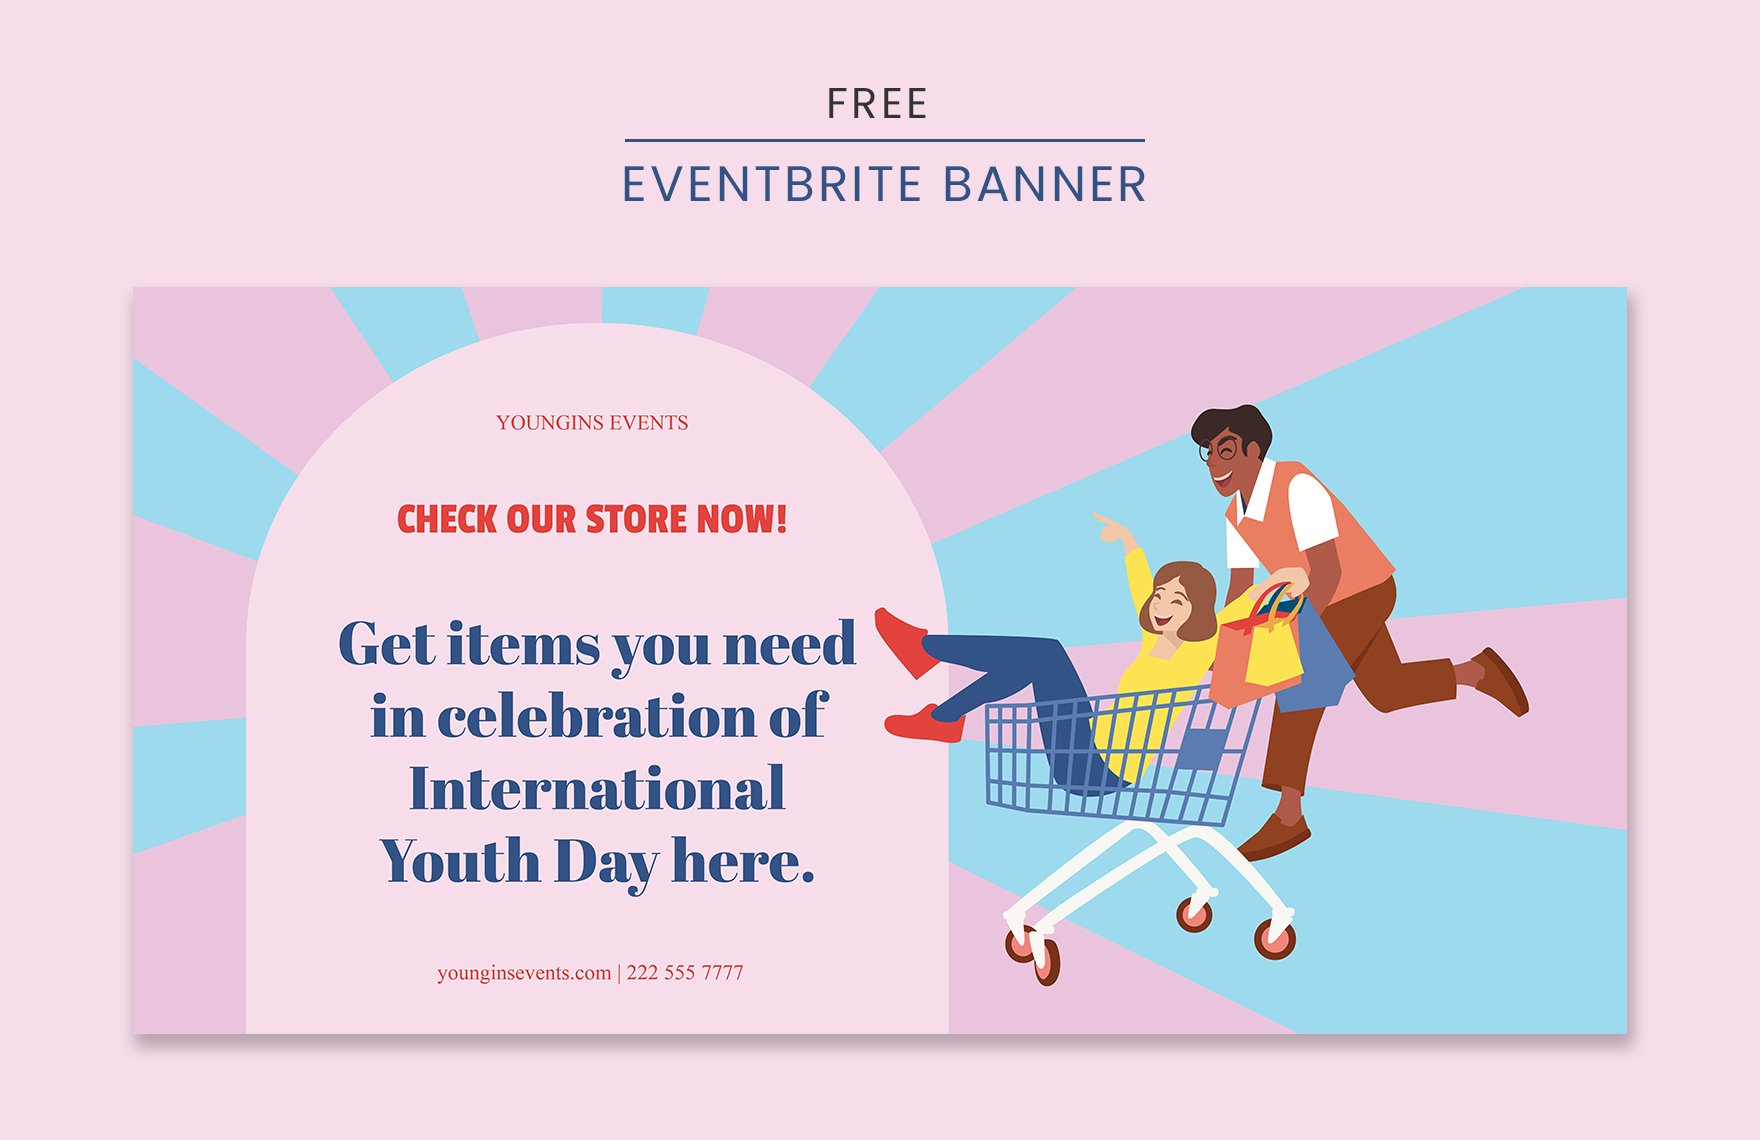 Free International Youth Day Eventbrite Banner in PDF, Illustrator, SVG, JPEG